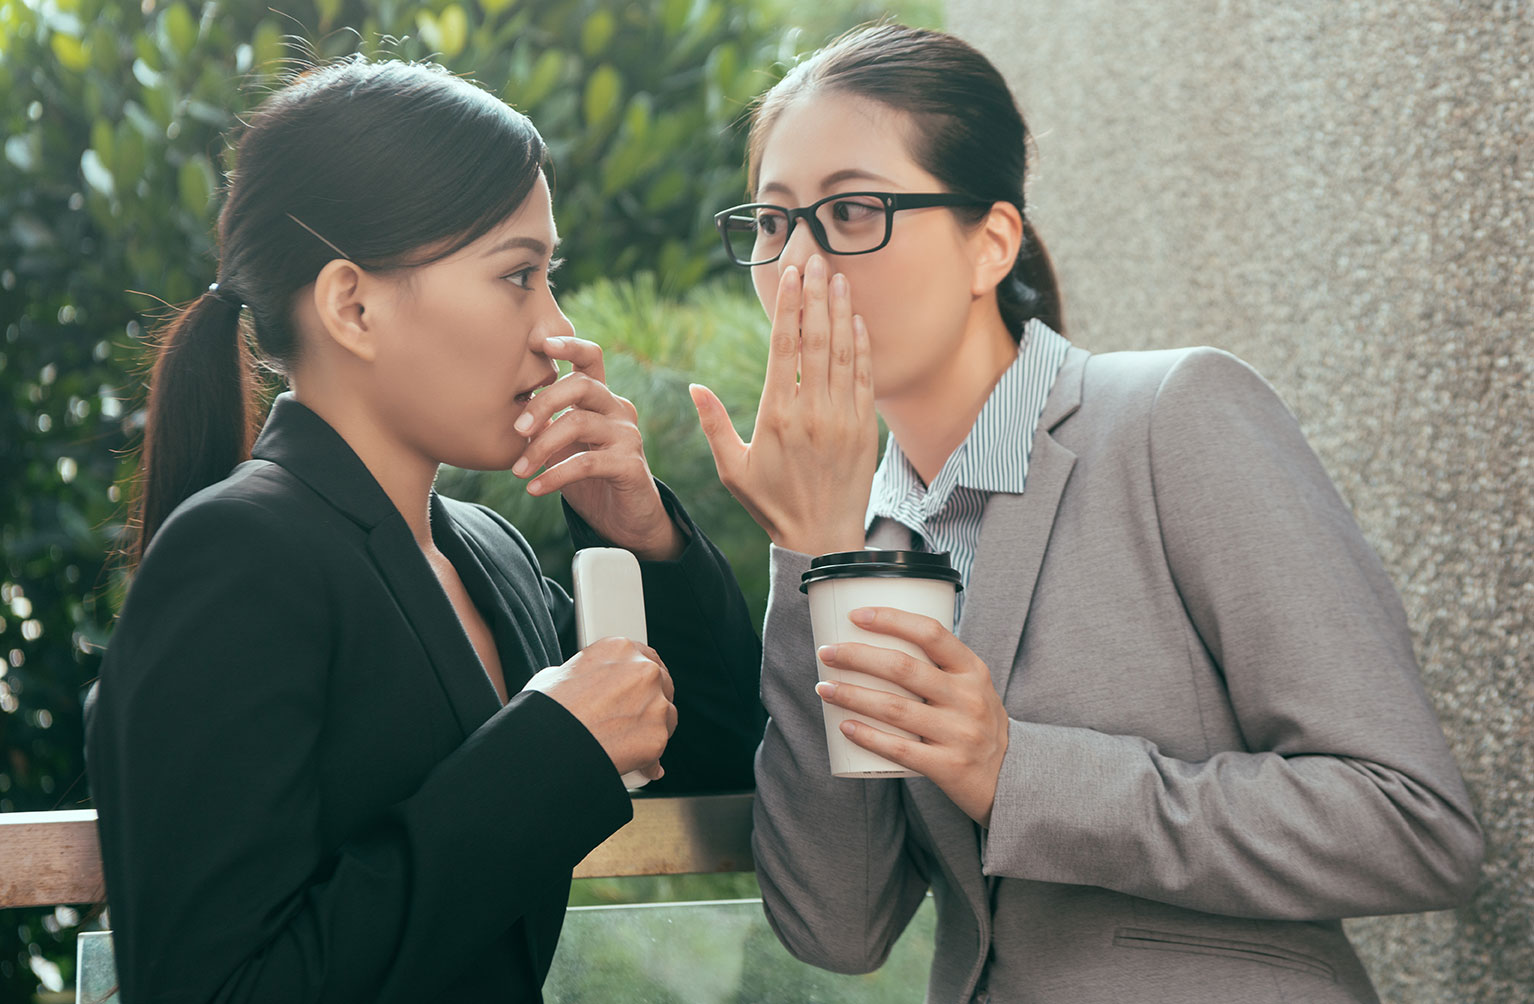 two women gossiping